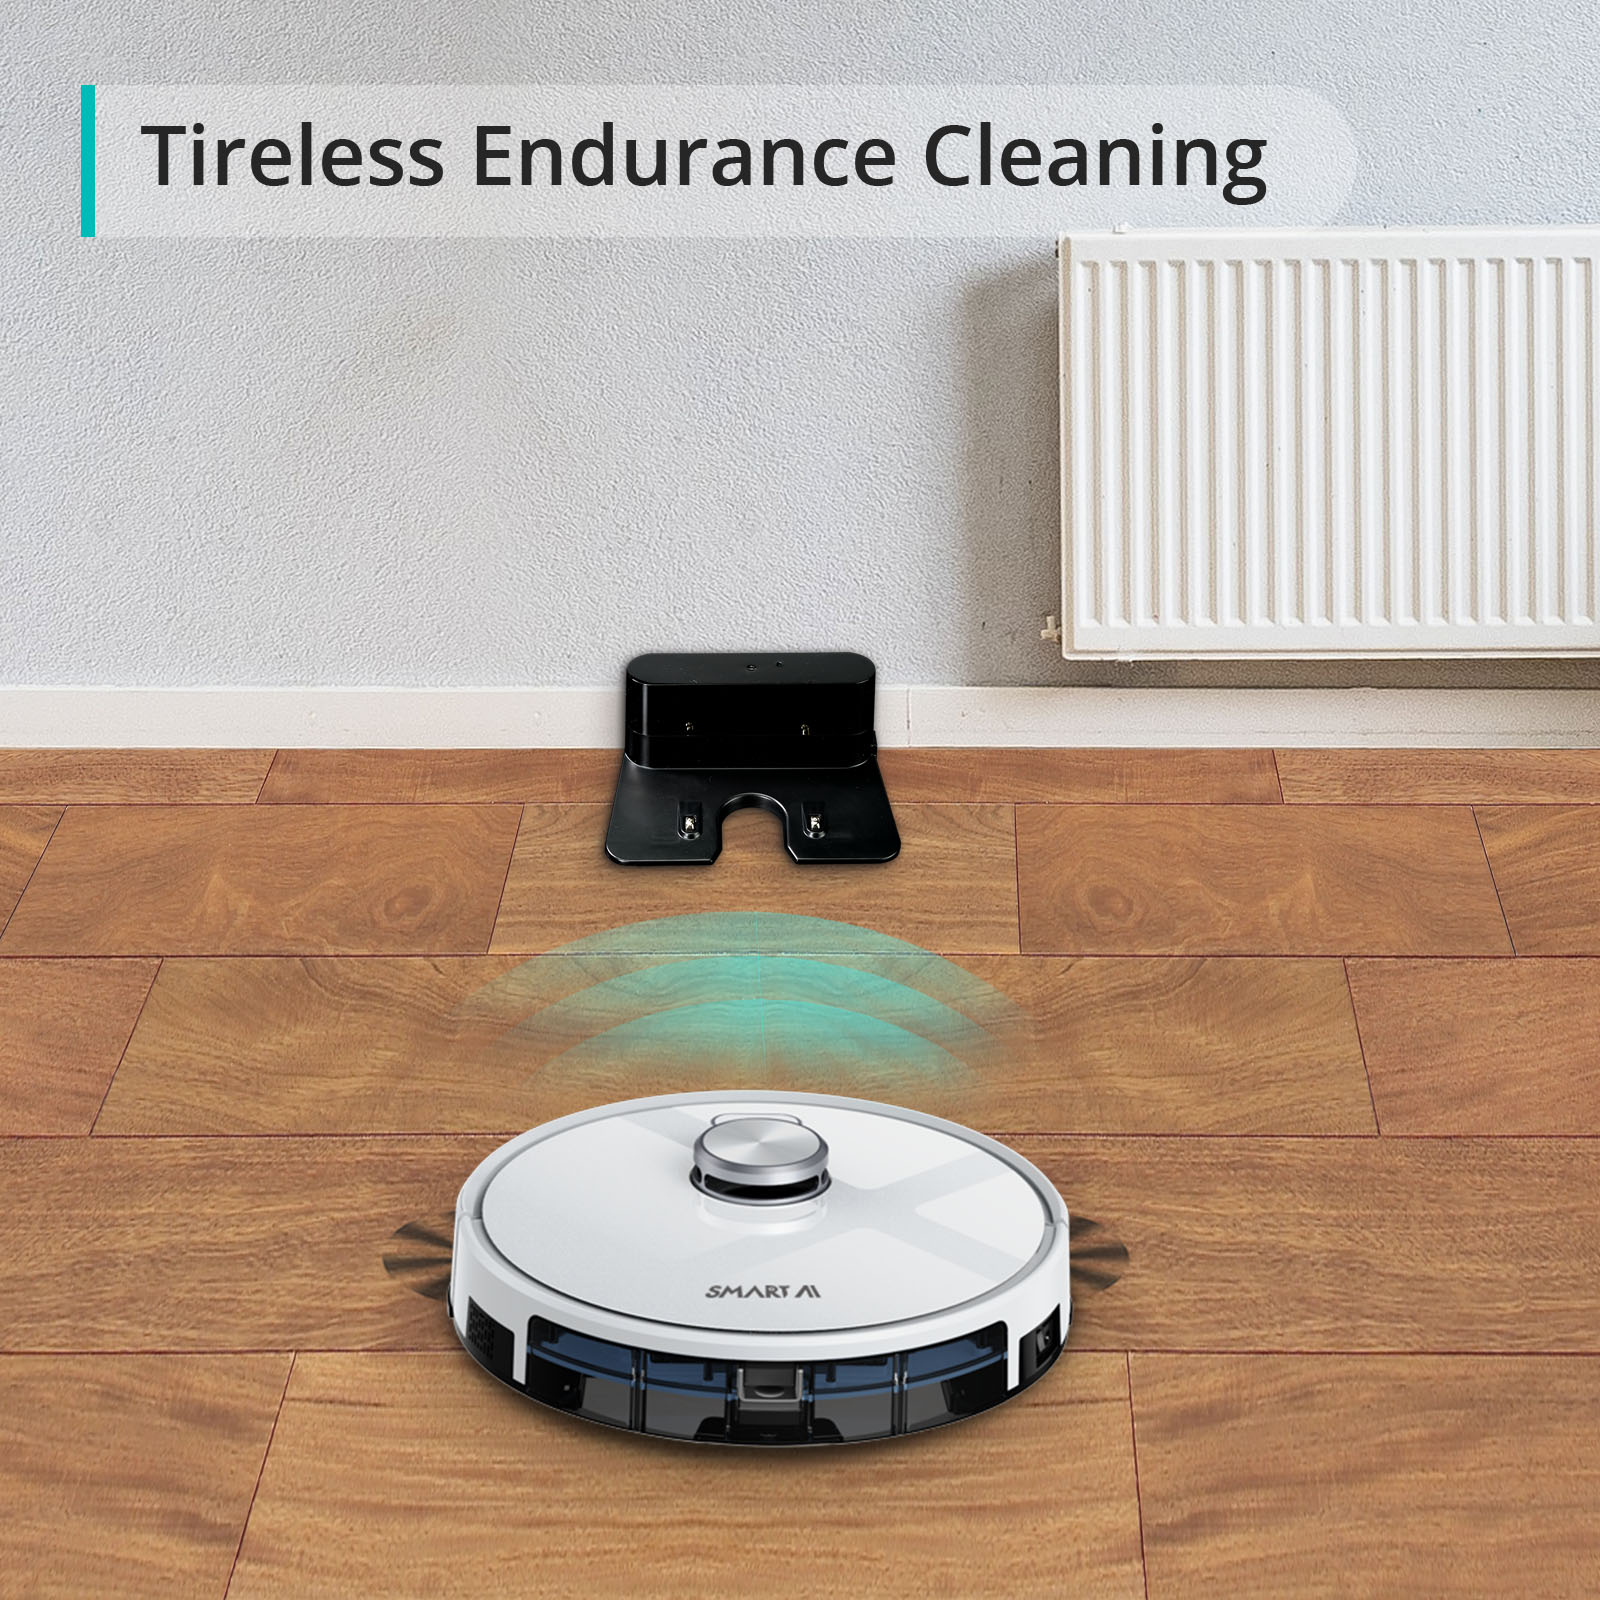 Tireless Endurance Cleaning